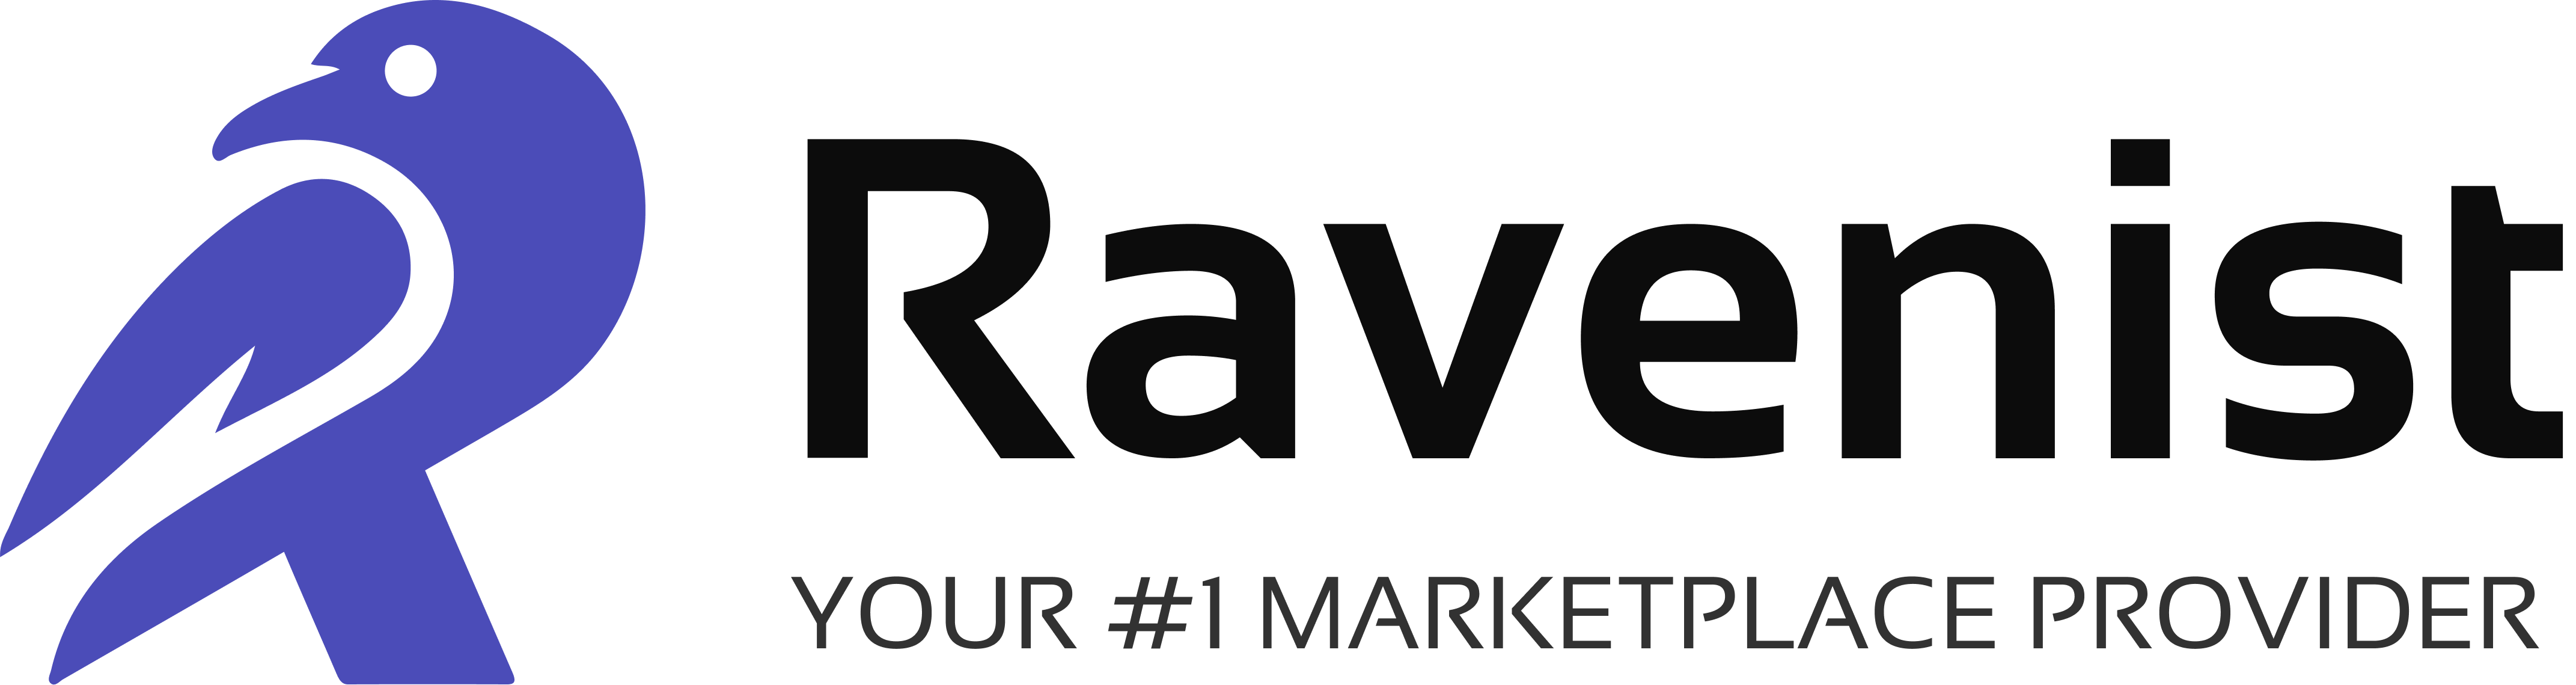 Ravenist NFT Marketplace for Ravencoin NFTS 7 Assets